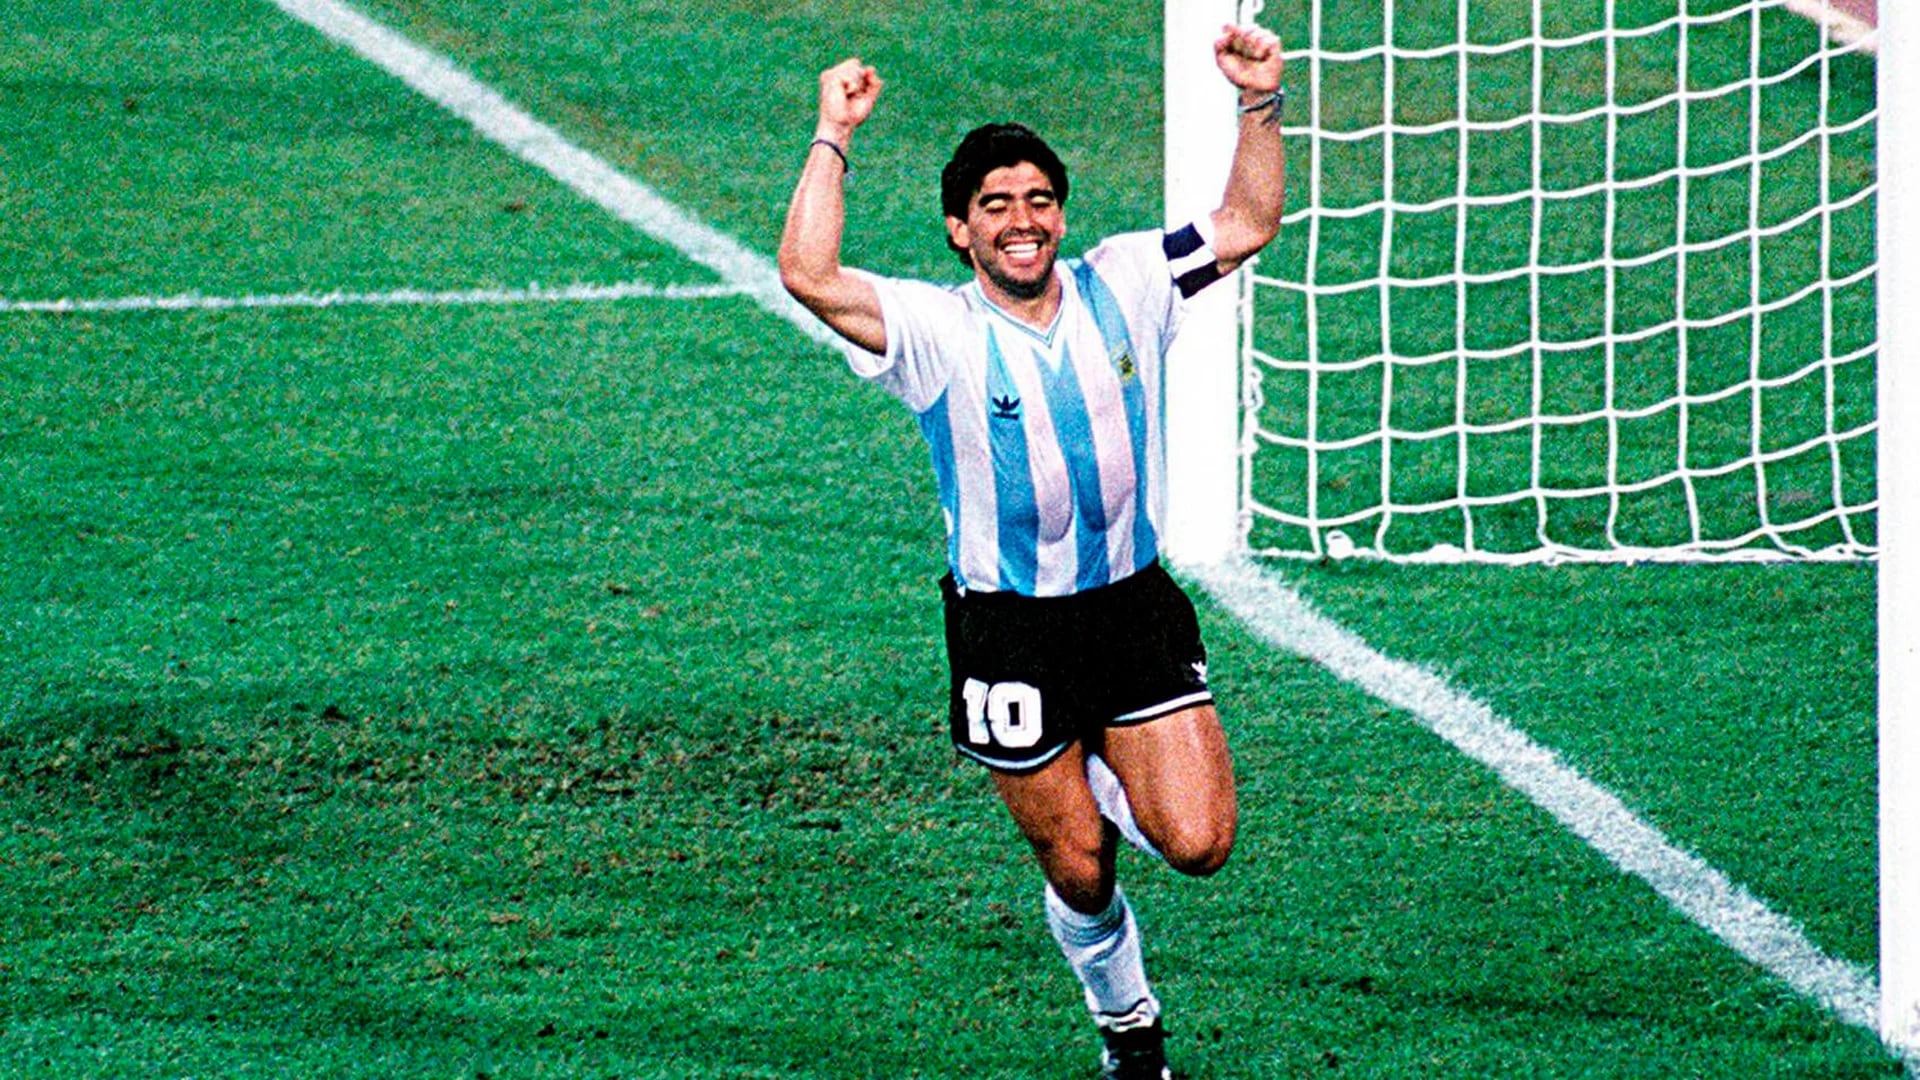 Diego Maradona en la semifinal de Italia 90 (Foto: Imago/Shutterstock)